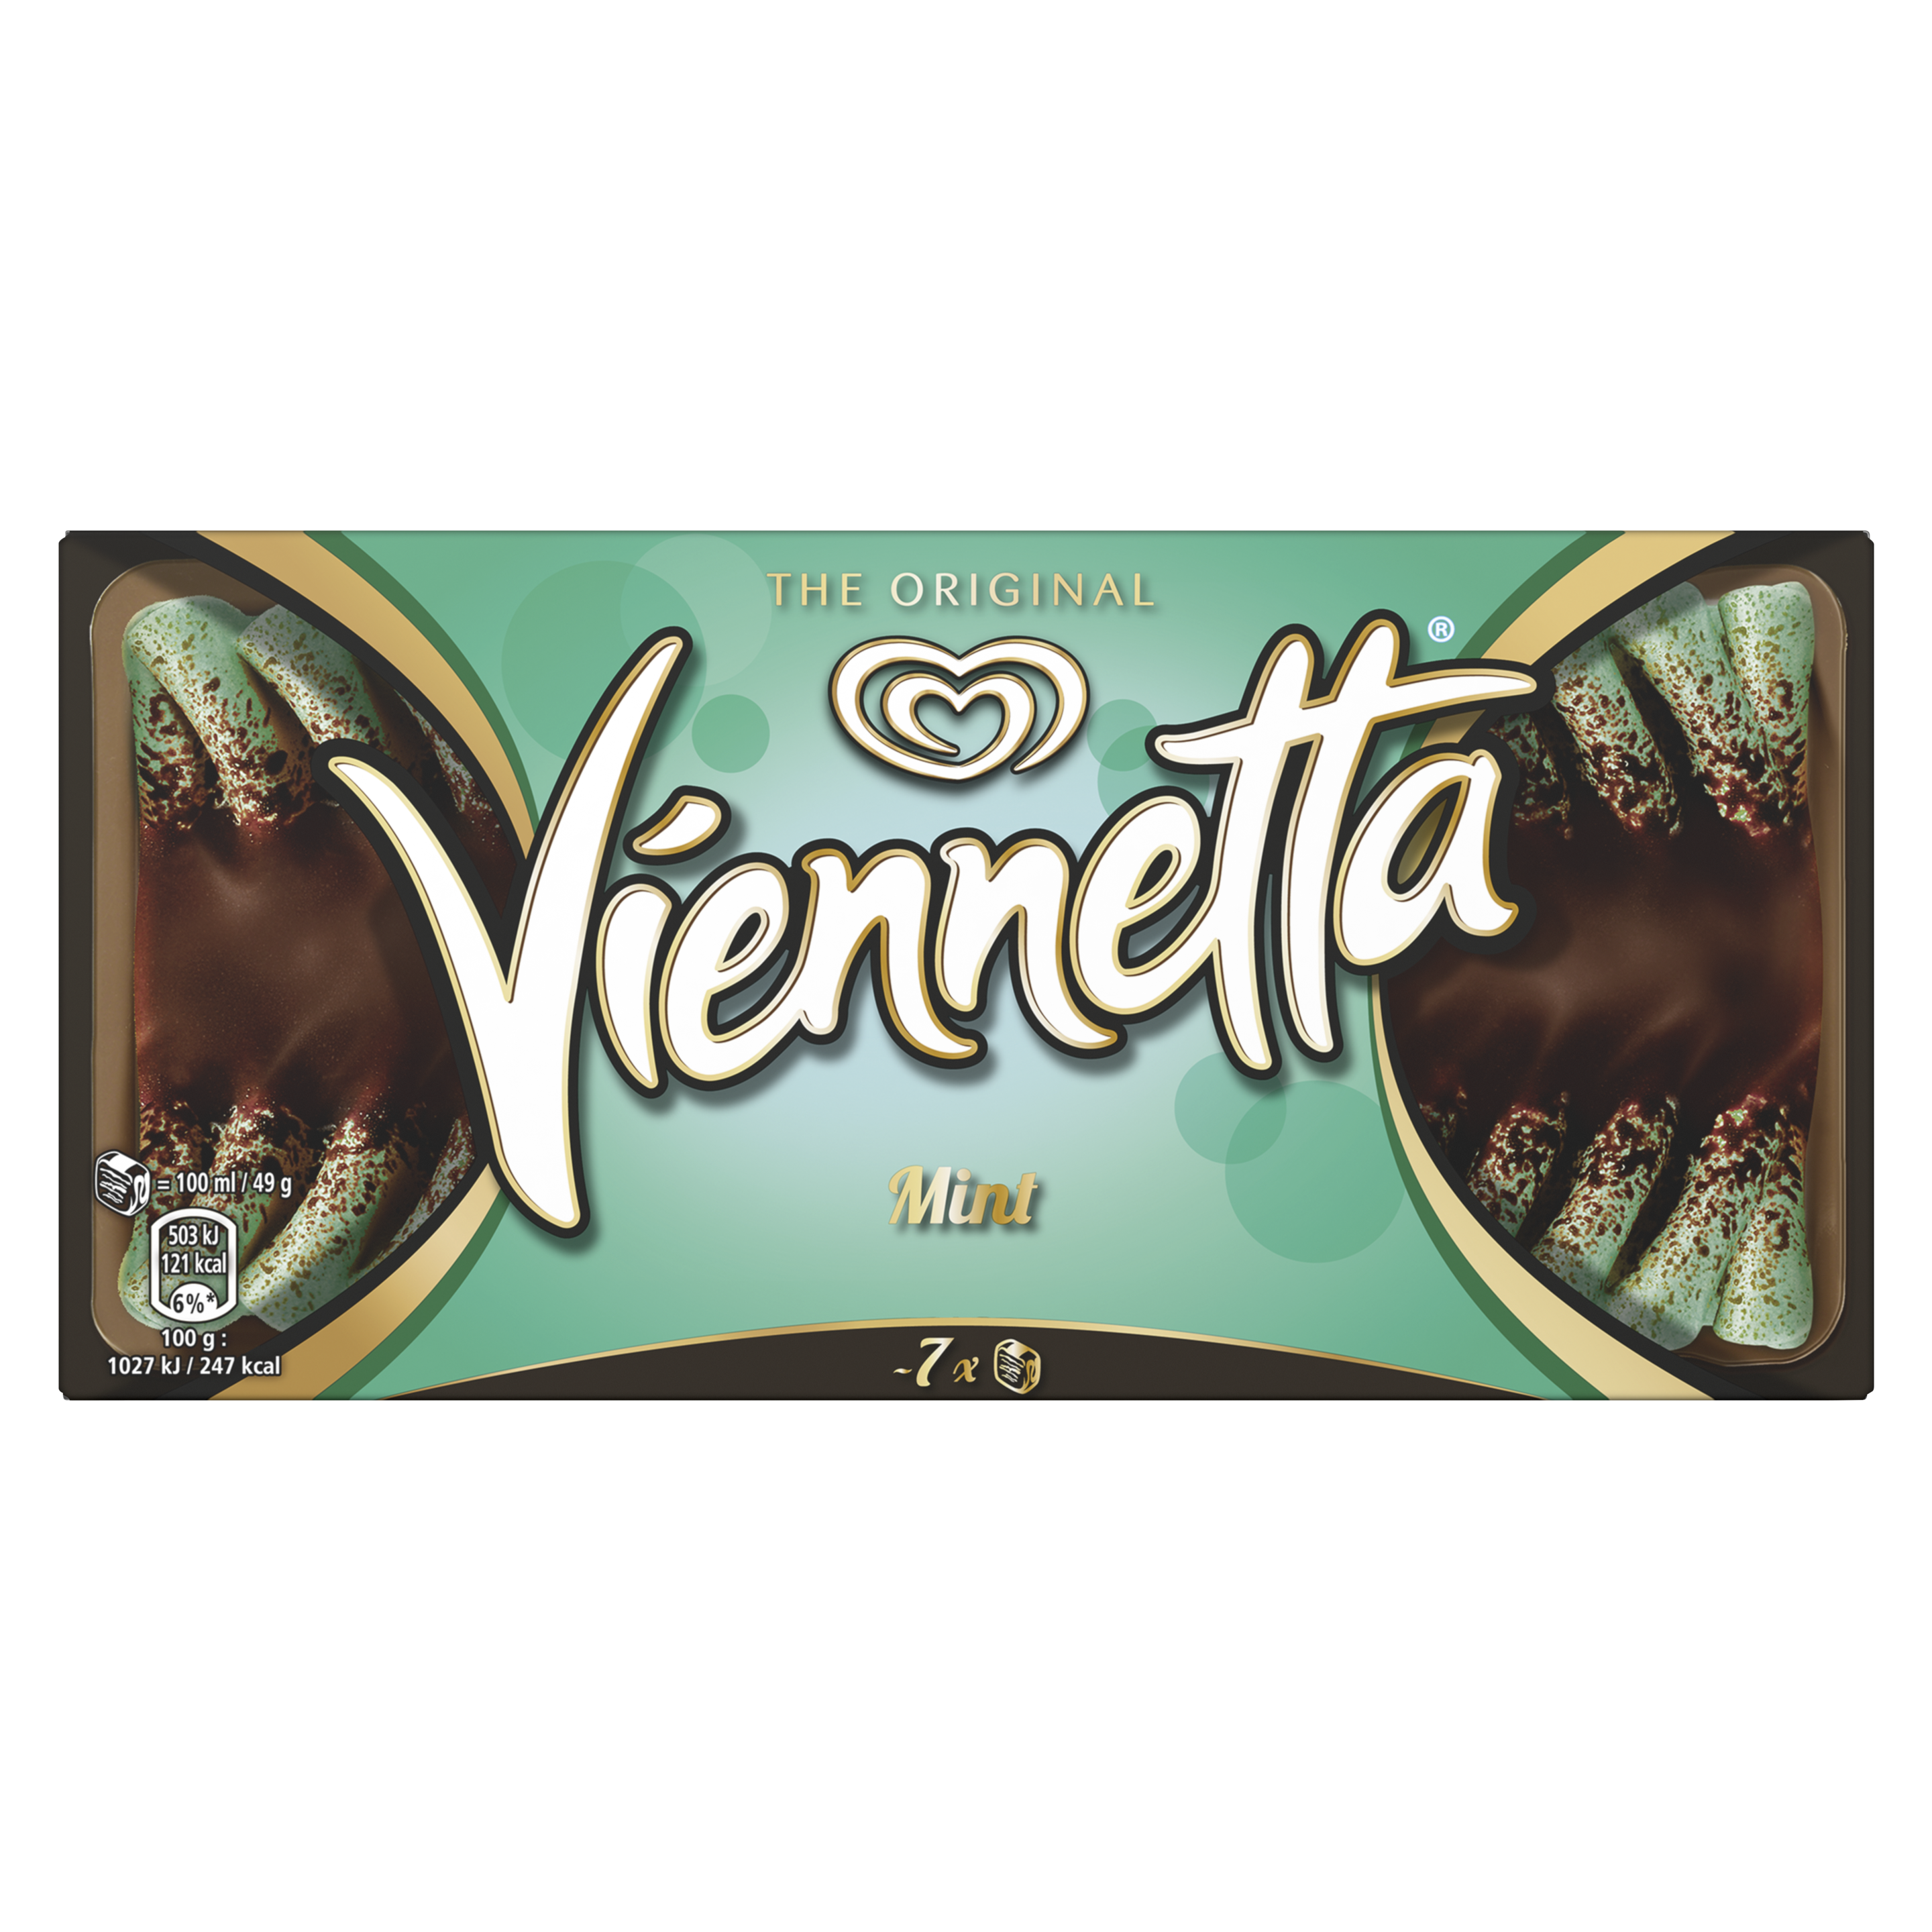 Viennetta Mint 650ml